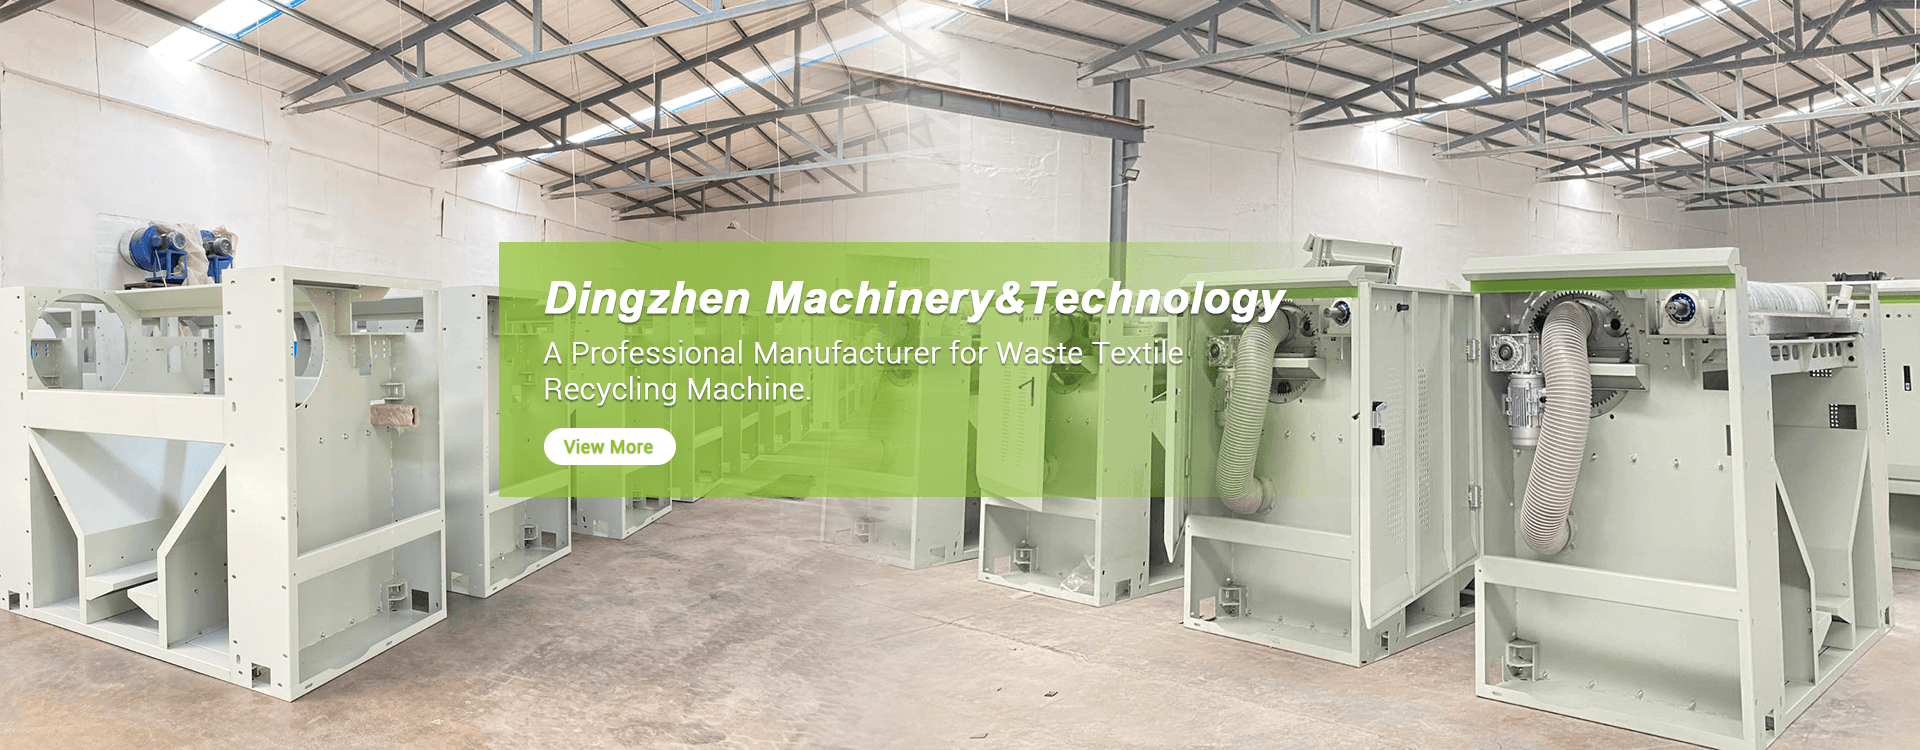 China waste textile recycling machine Manufacturer- DINGZHEN